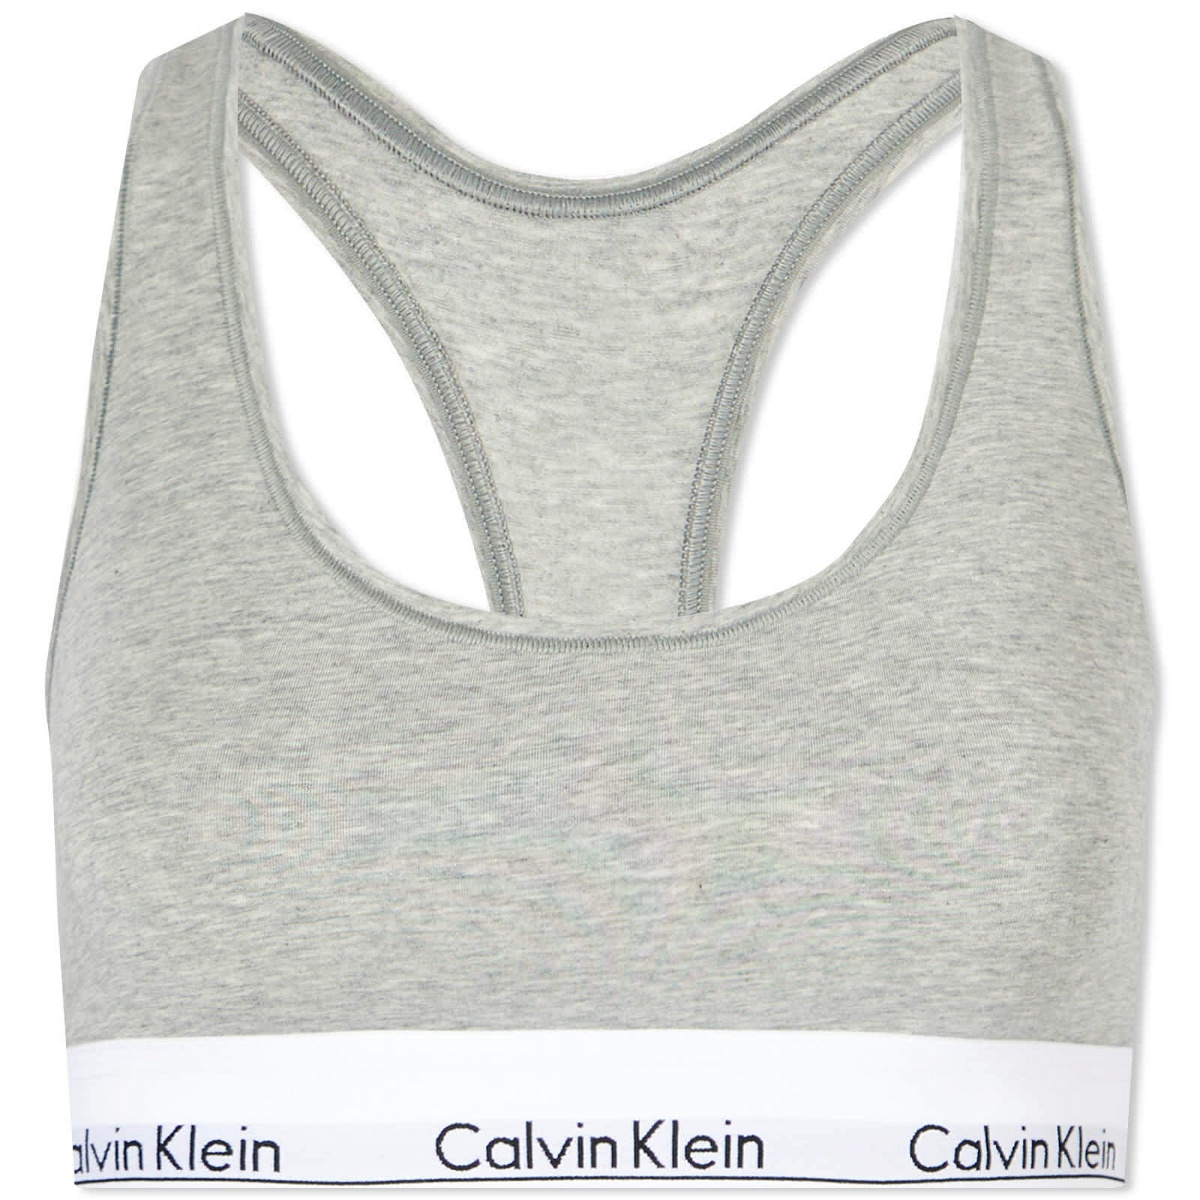 Calvin Klein Women's Grey Bras